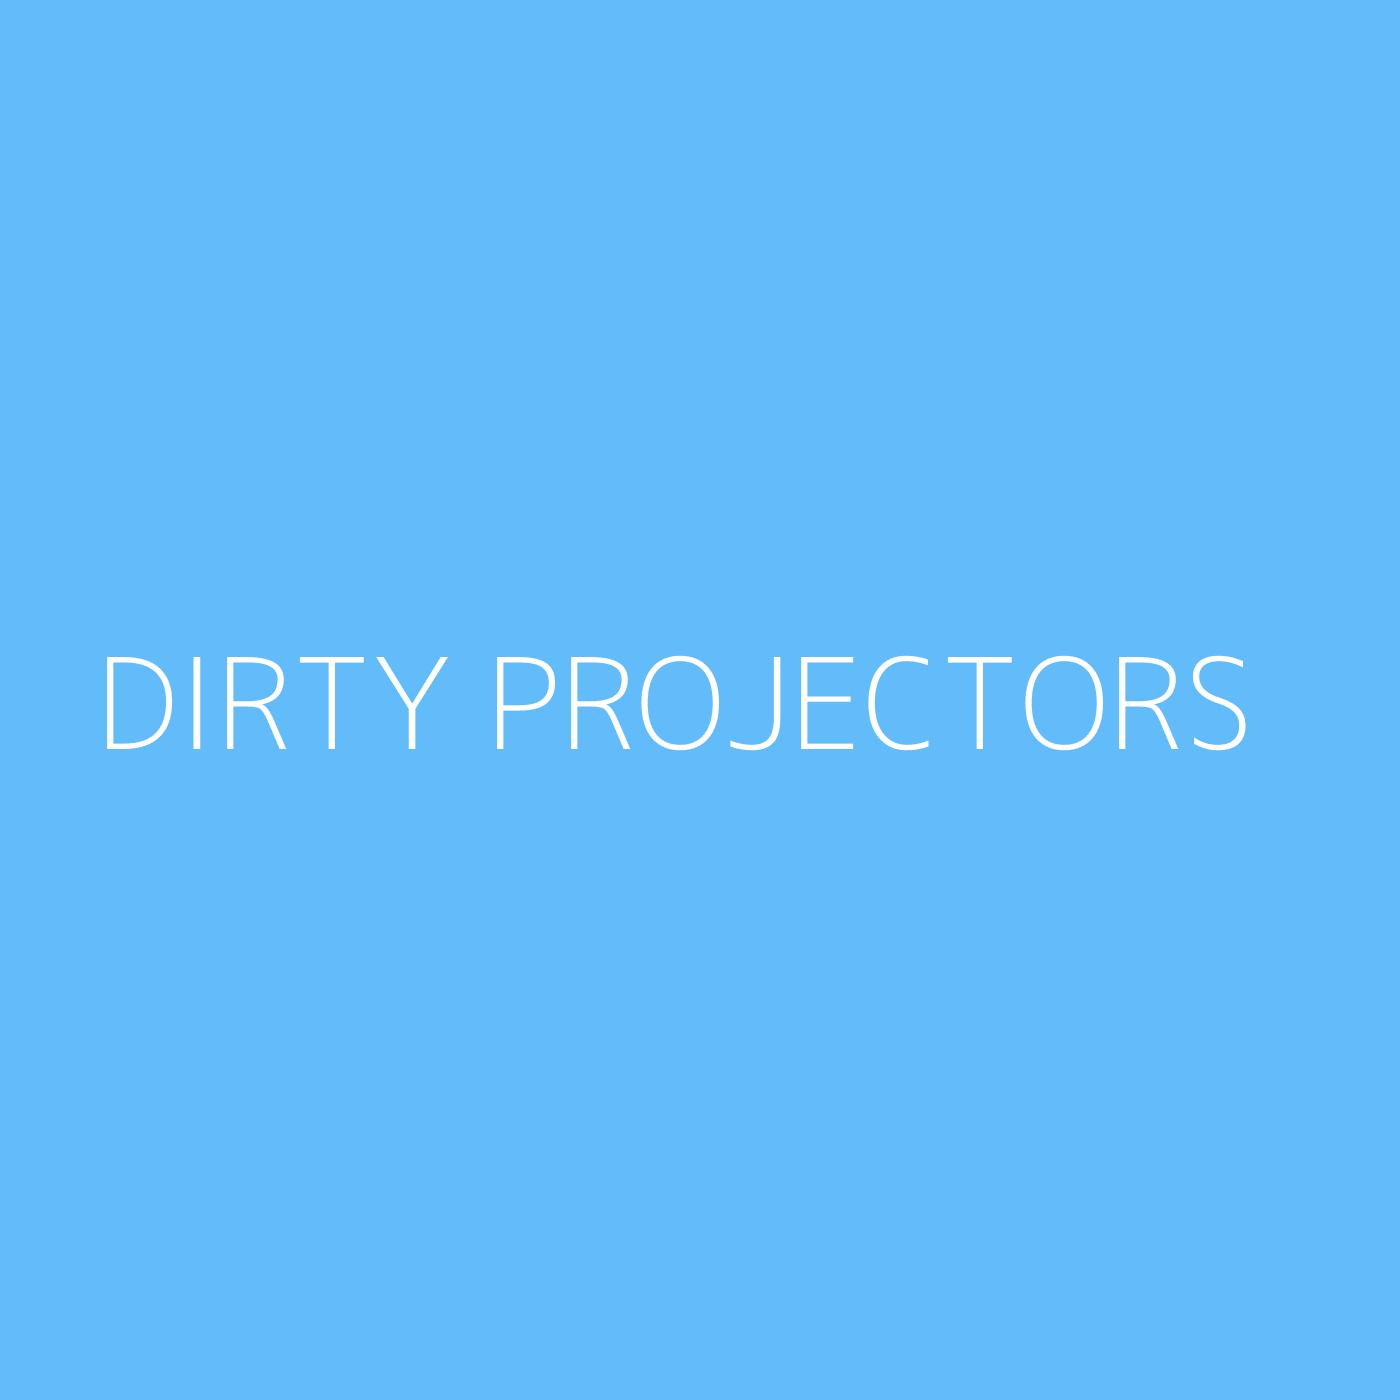 Dirty Projectors Playlist Artwork